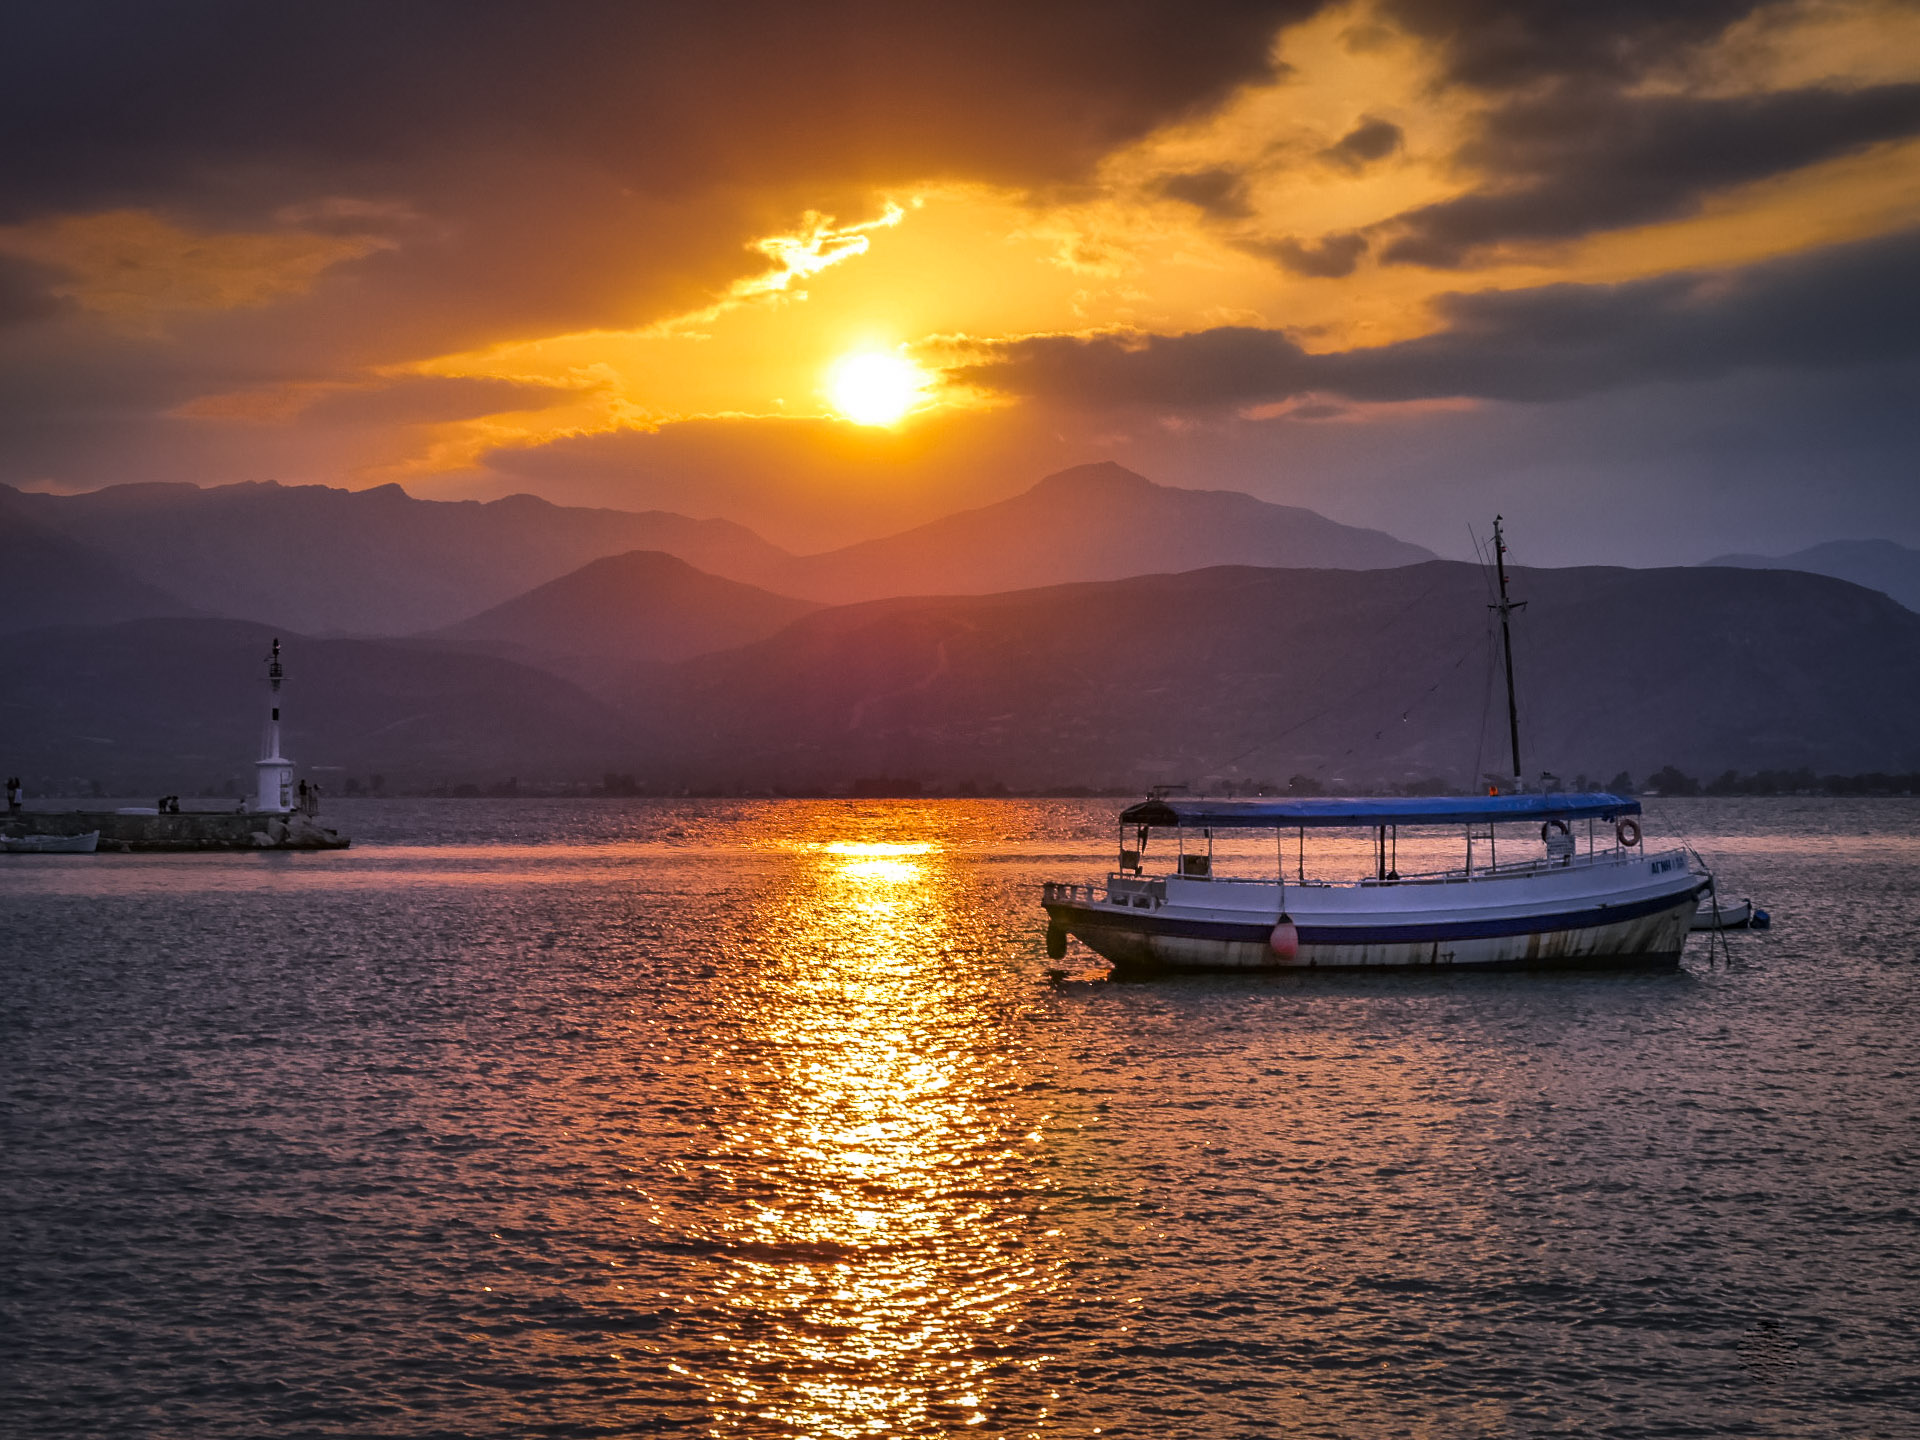 Sunset in Nafplio, Greece